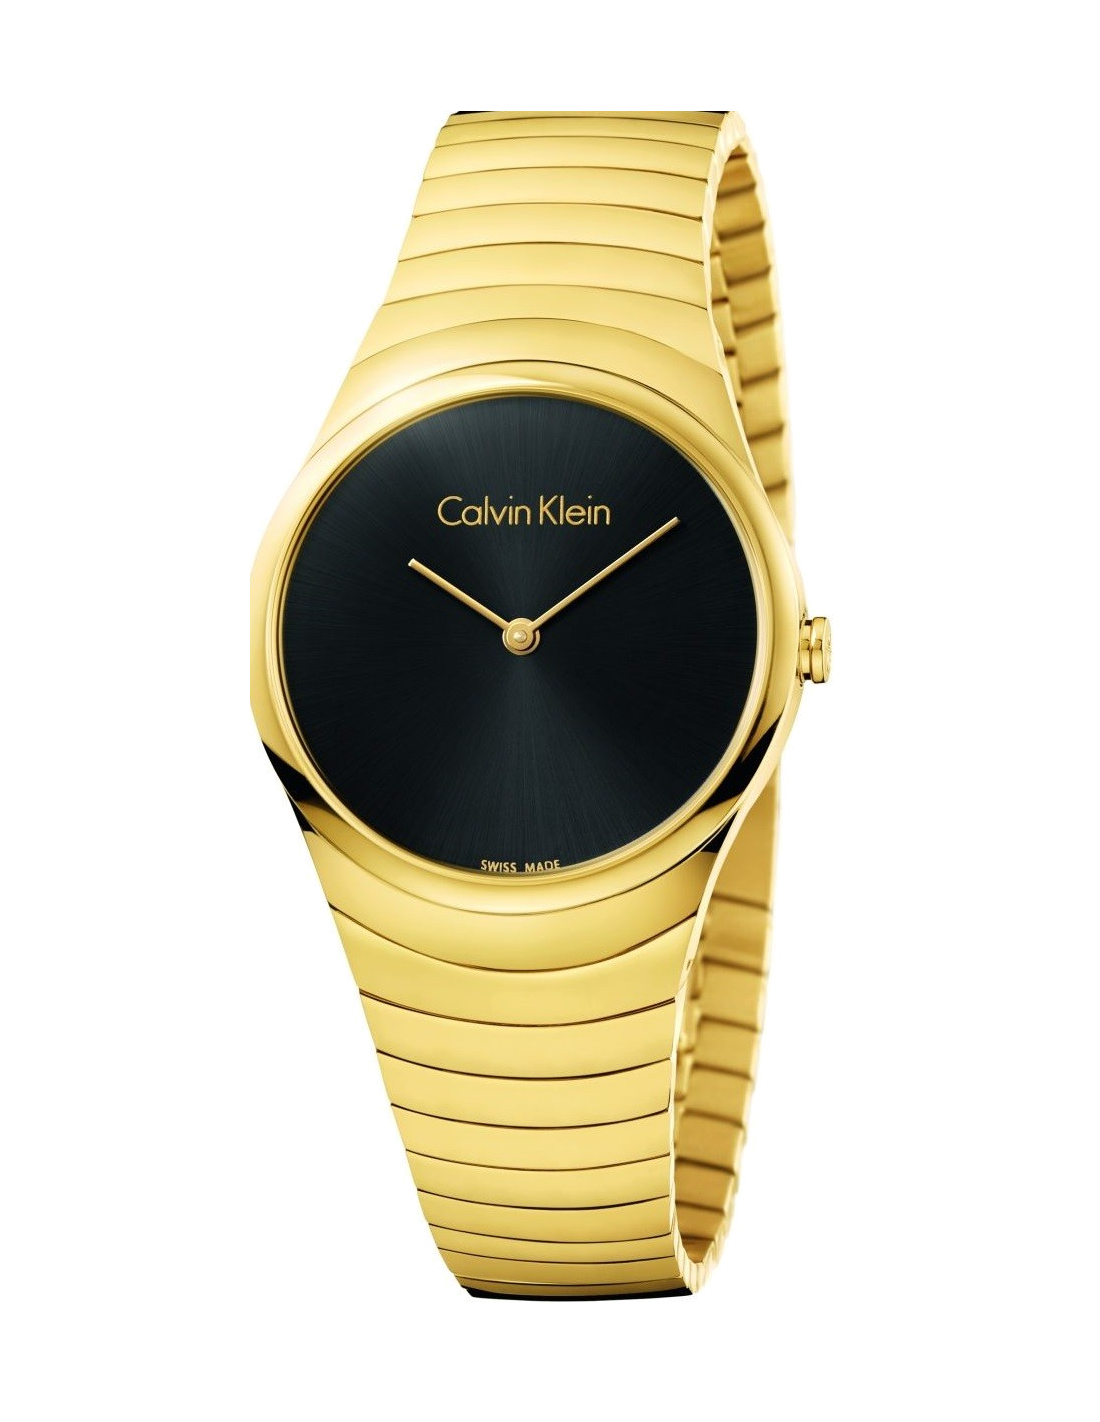 Calvin Klein K8A23541 women's watch at 399,00 € Authorized Vendor